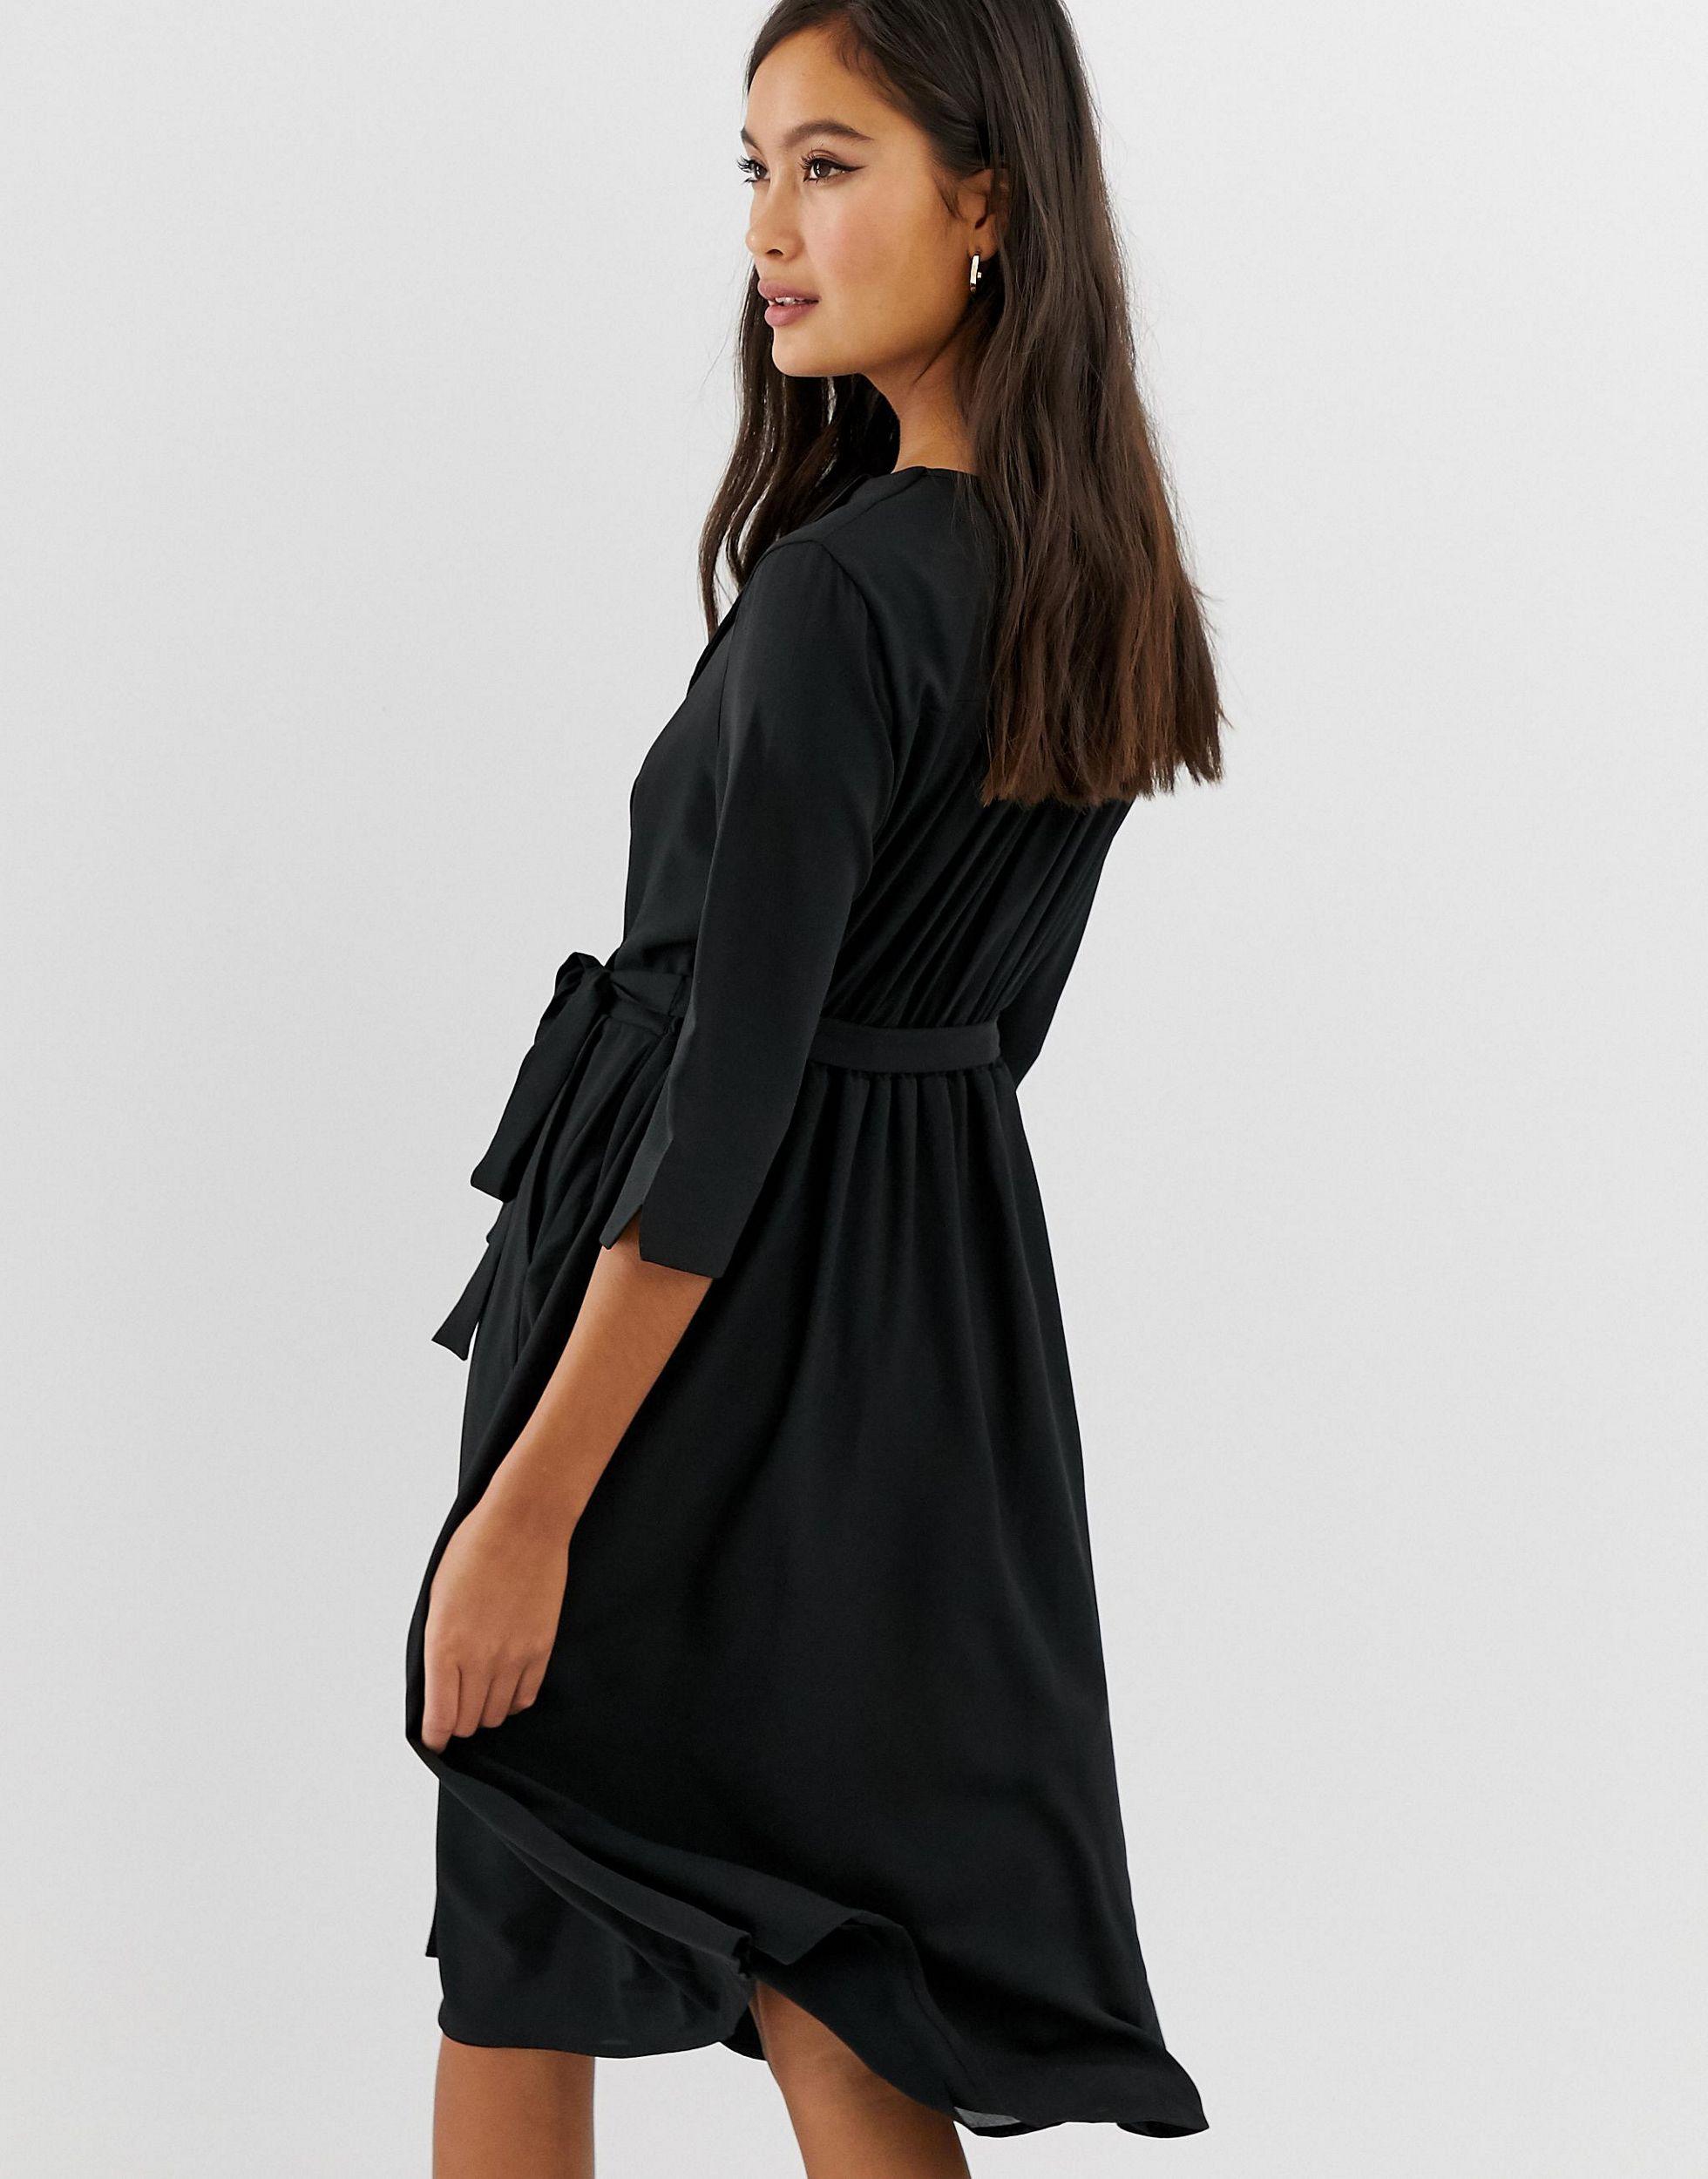 Amy Lynn Synthetic 3/4 Sleeve Wrap Front Dress in Black - Lyst